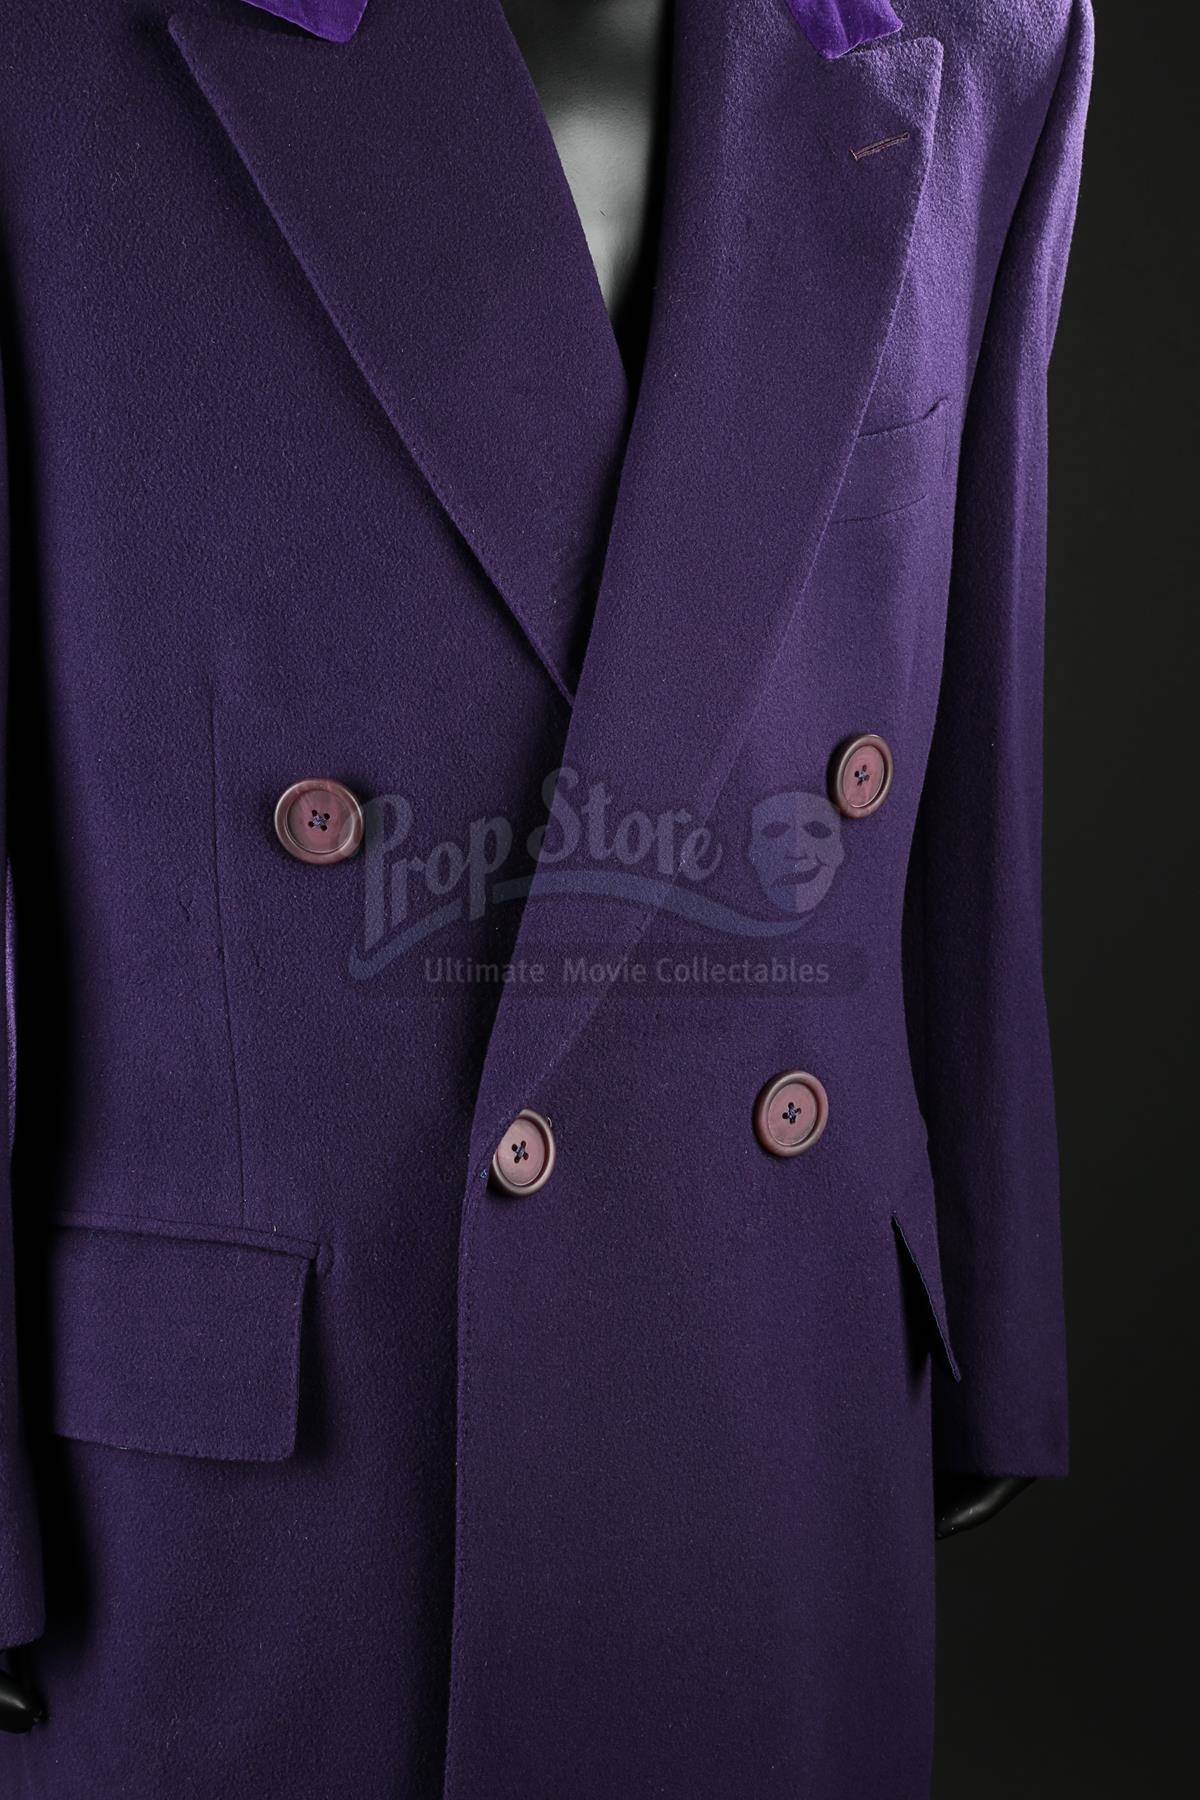 Screen-used Joker costume overcoat (1989)